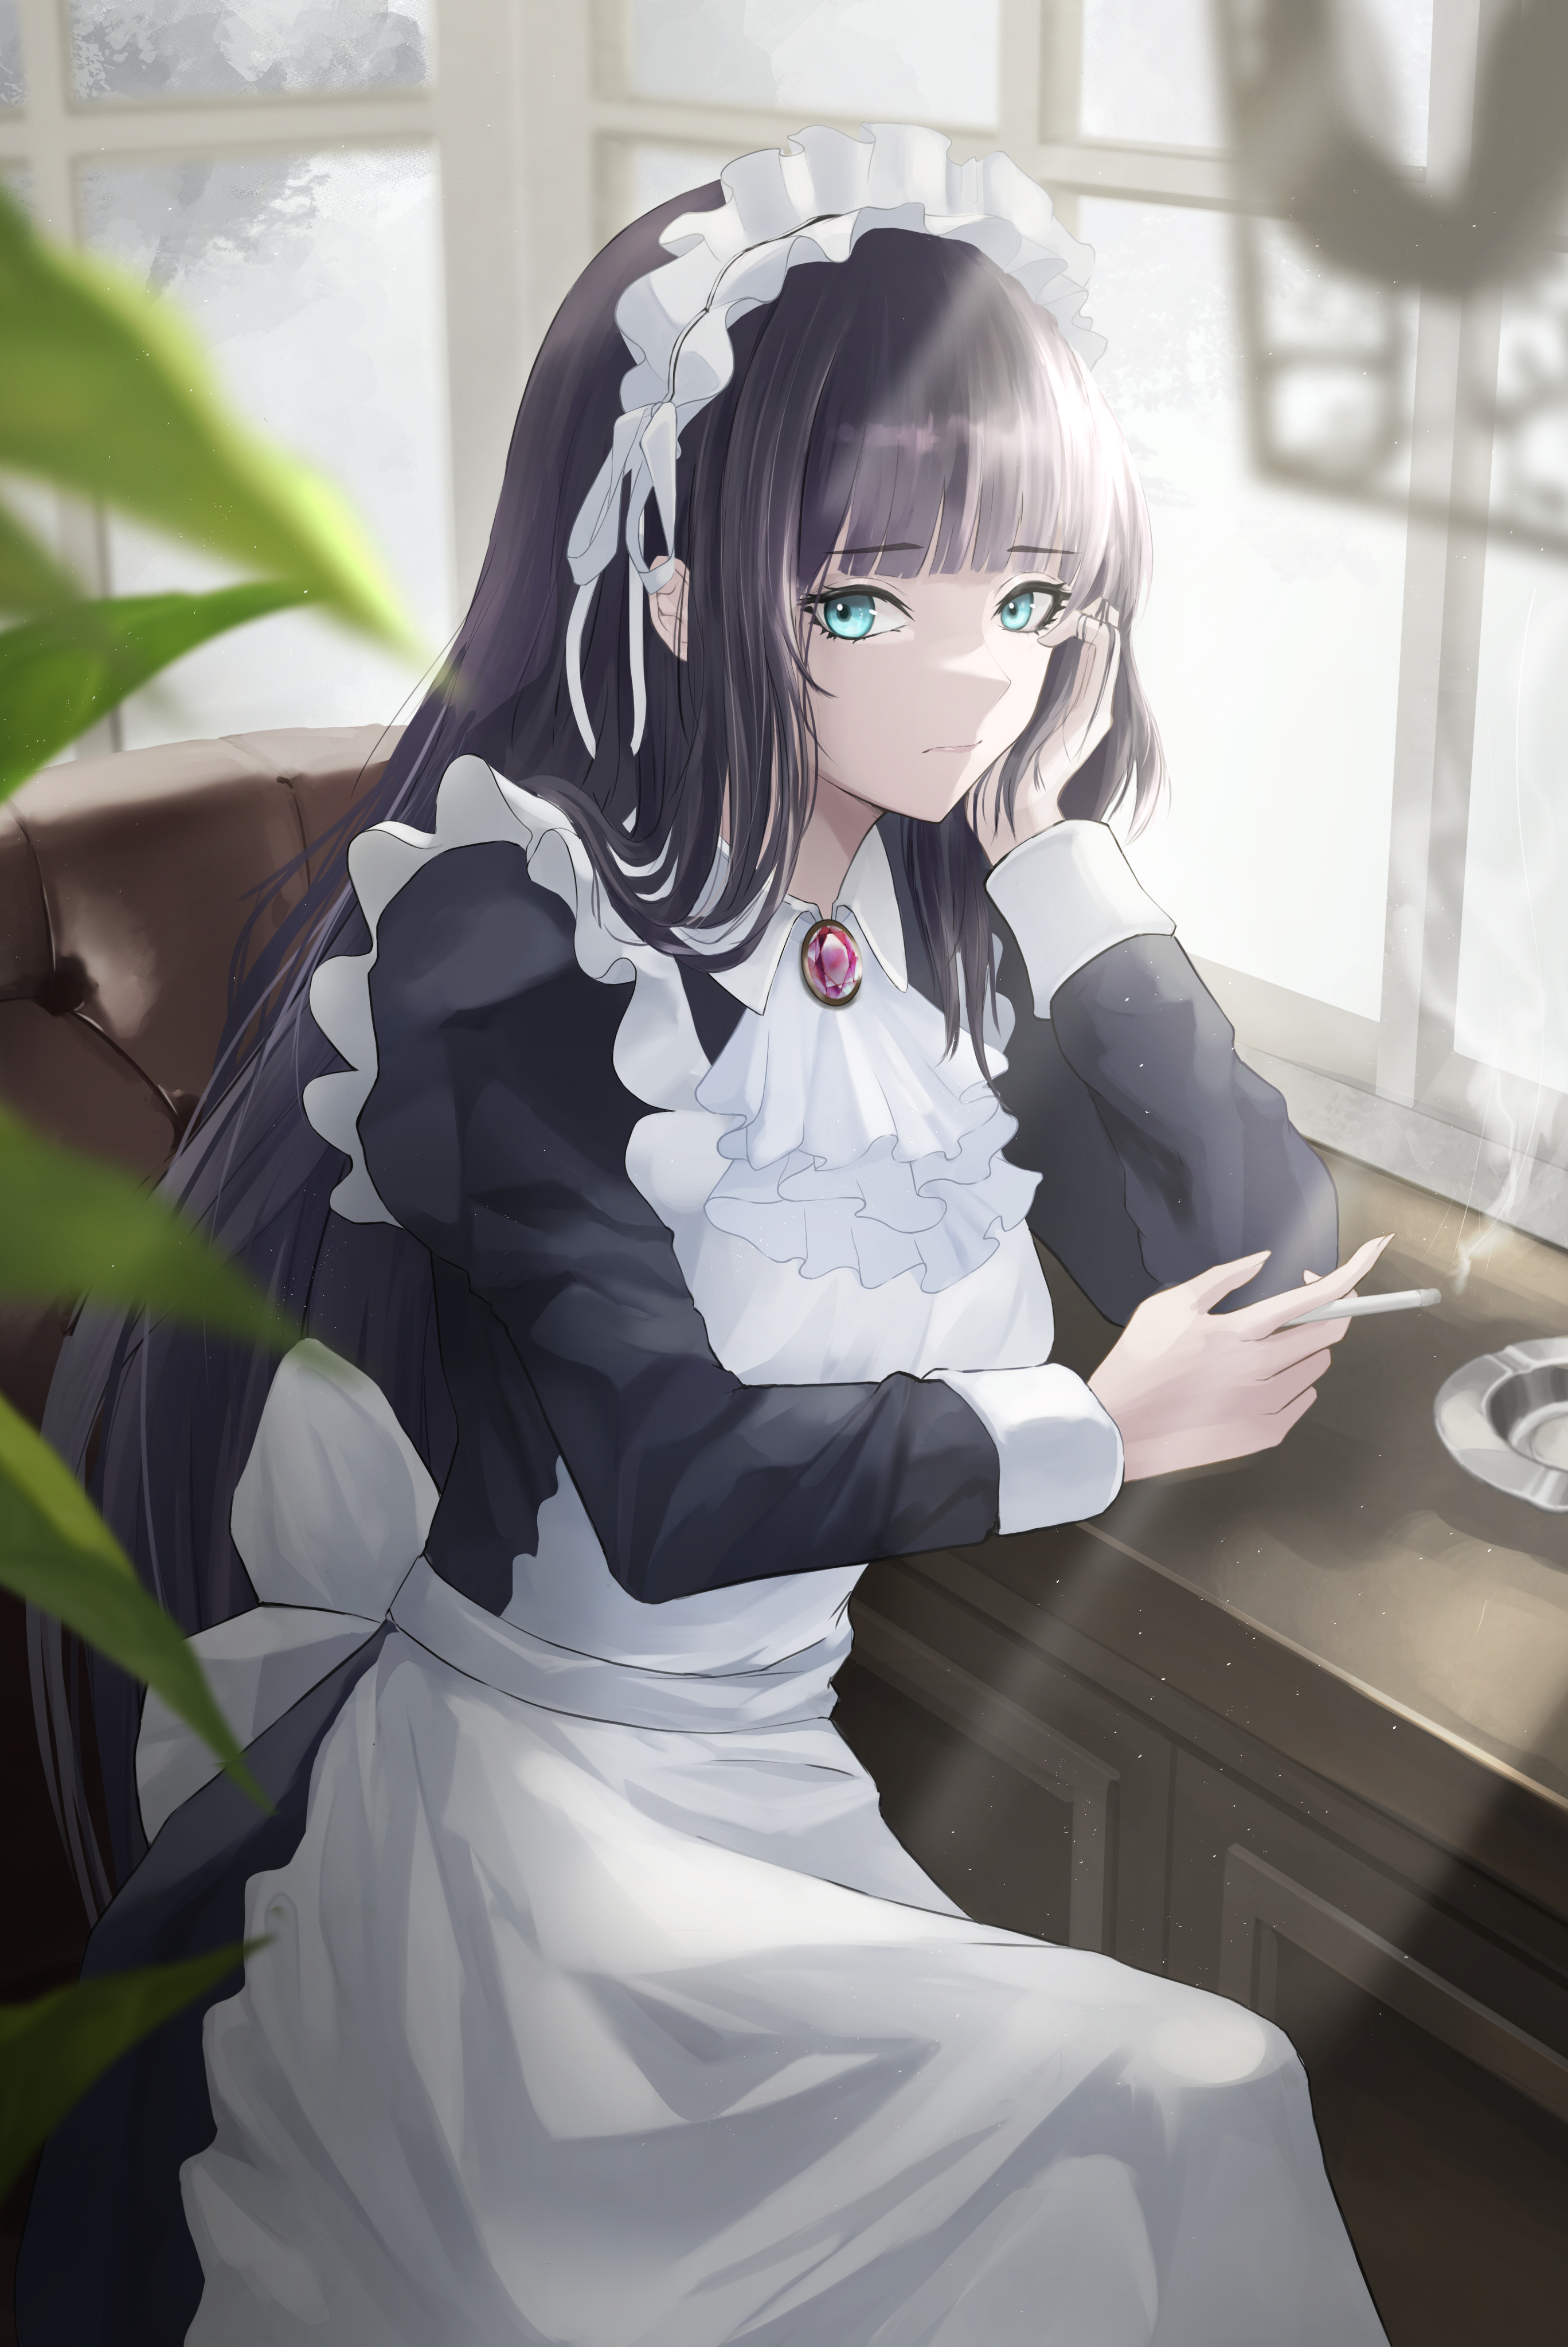 Anime 2735x4093 anime anime girls original characters maid maid outfit artwork digital art fan art